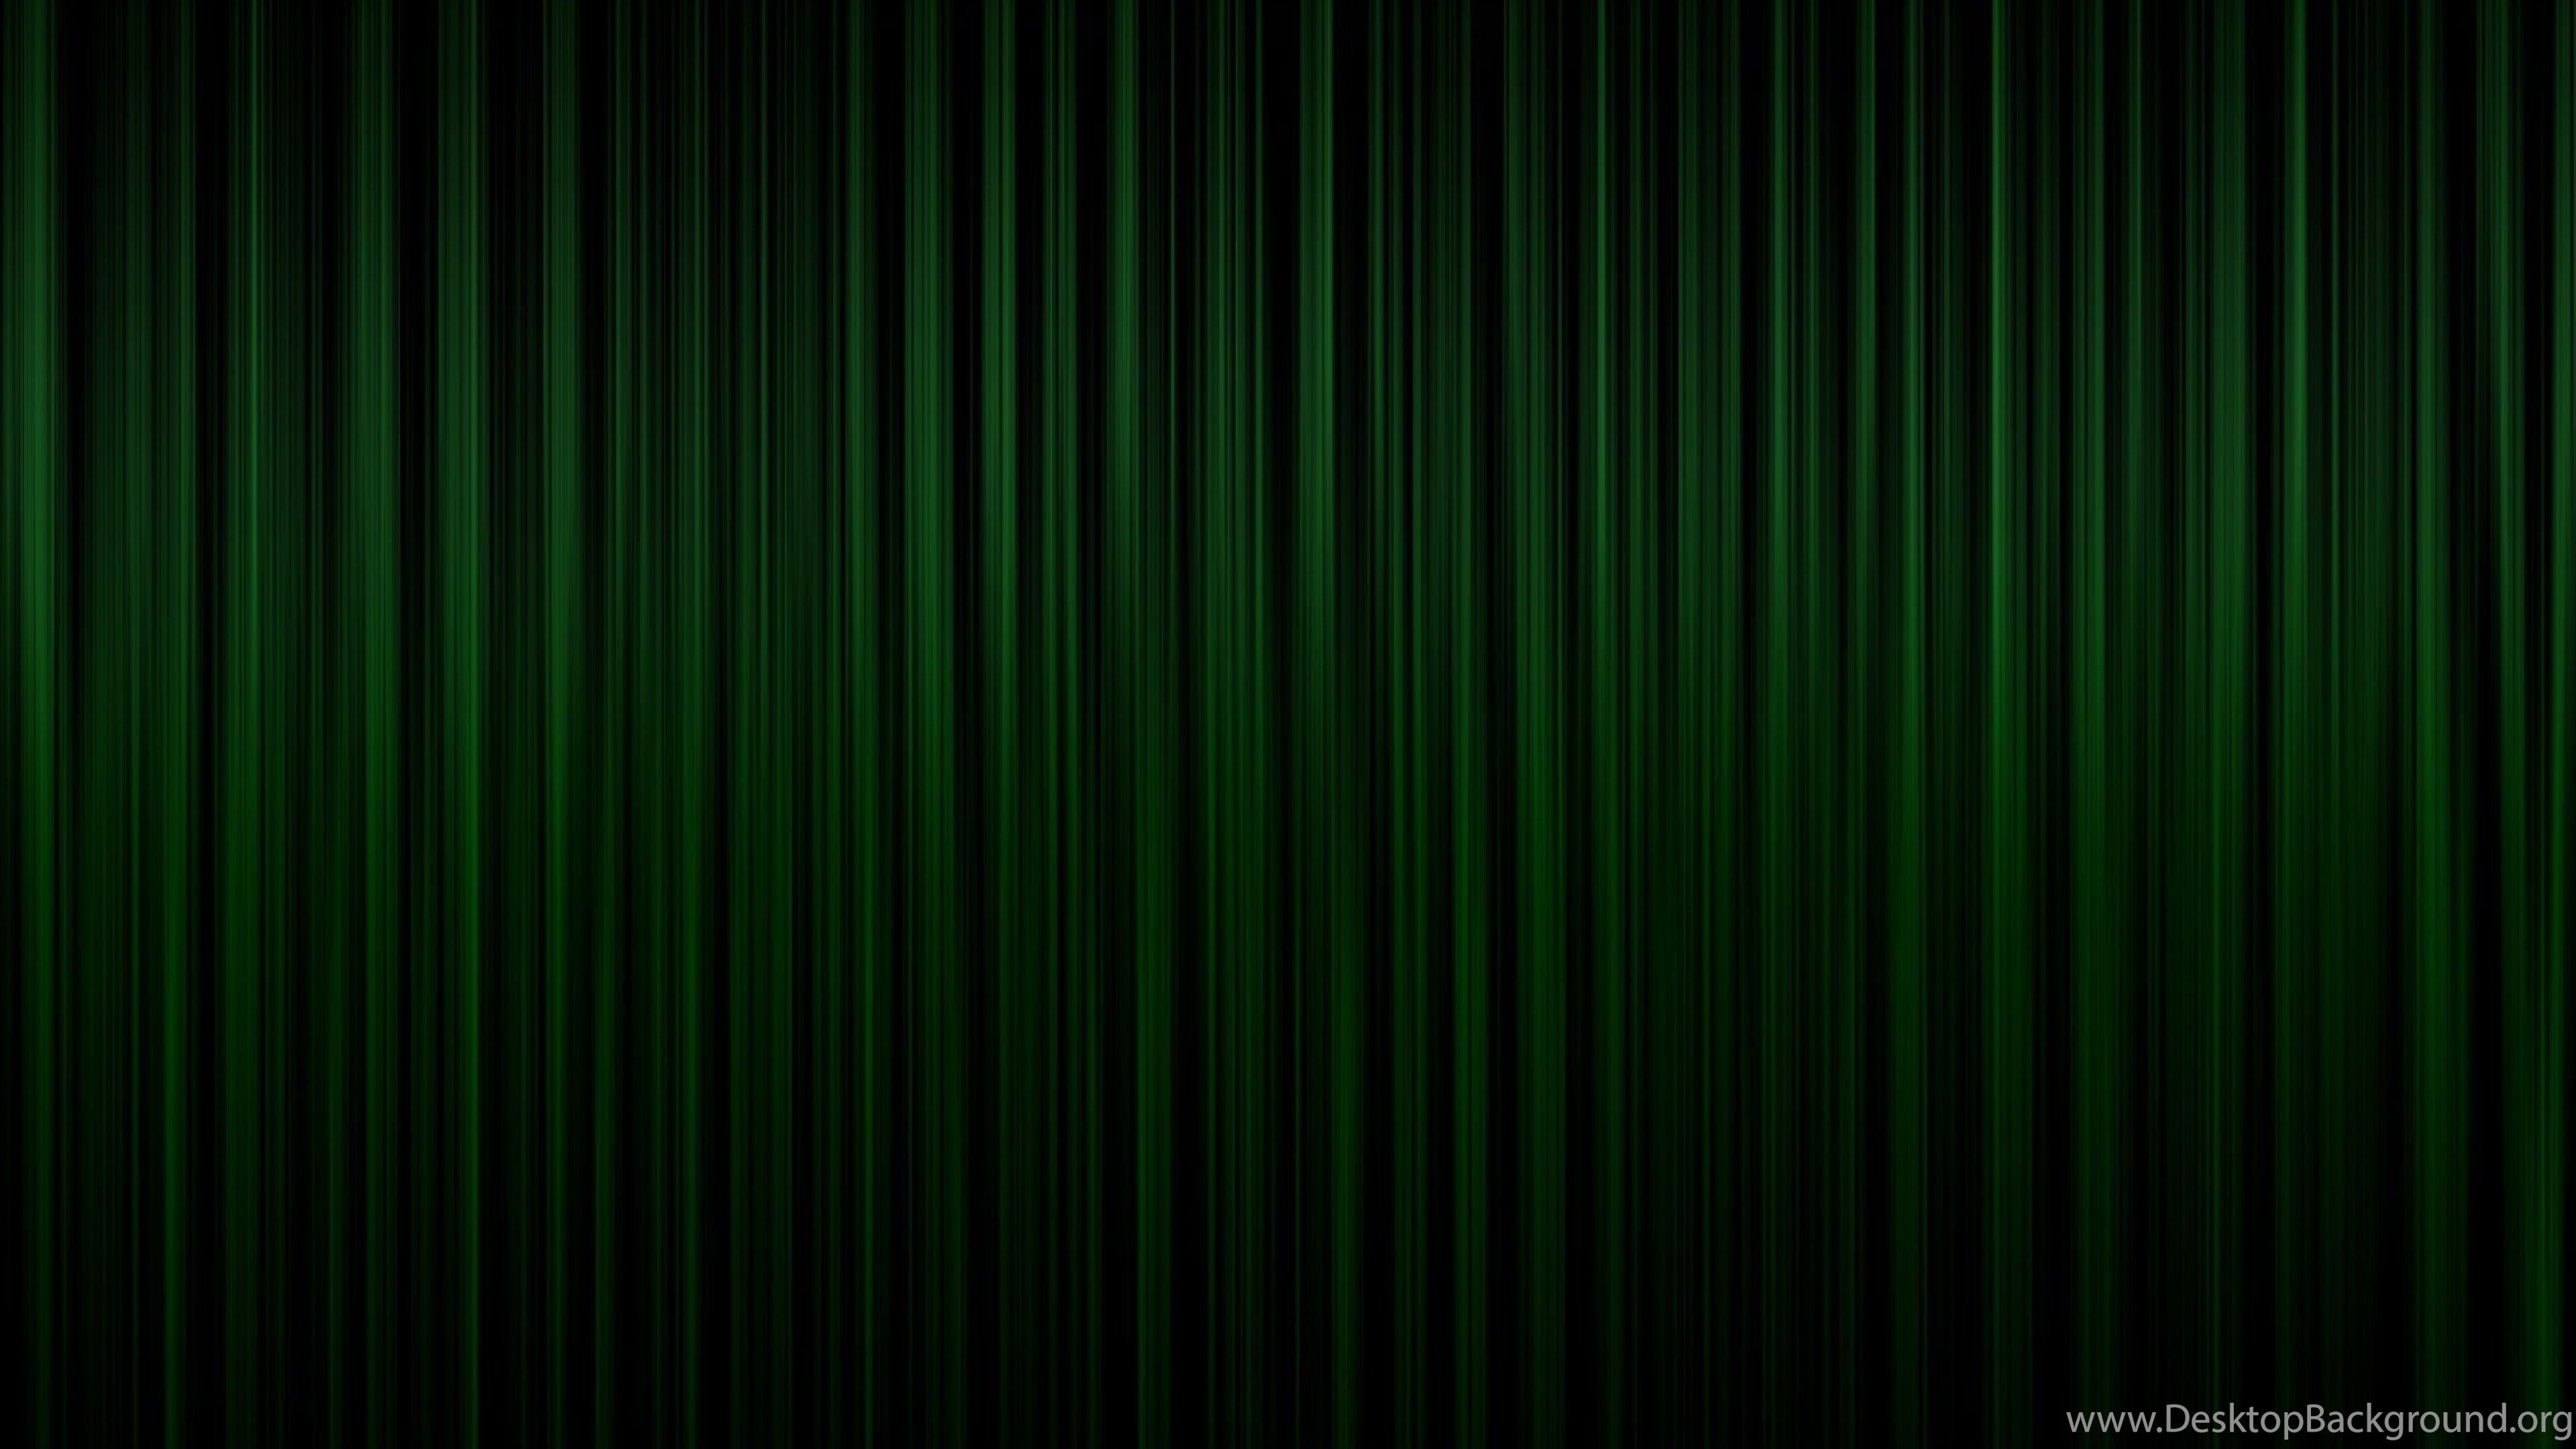 Download Wallpaper 3840x2400 Green, Bands, Vertical, Dark, Shadow. Desktop Background